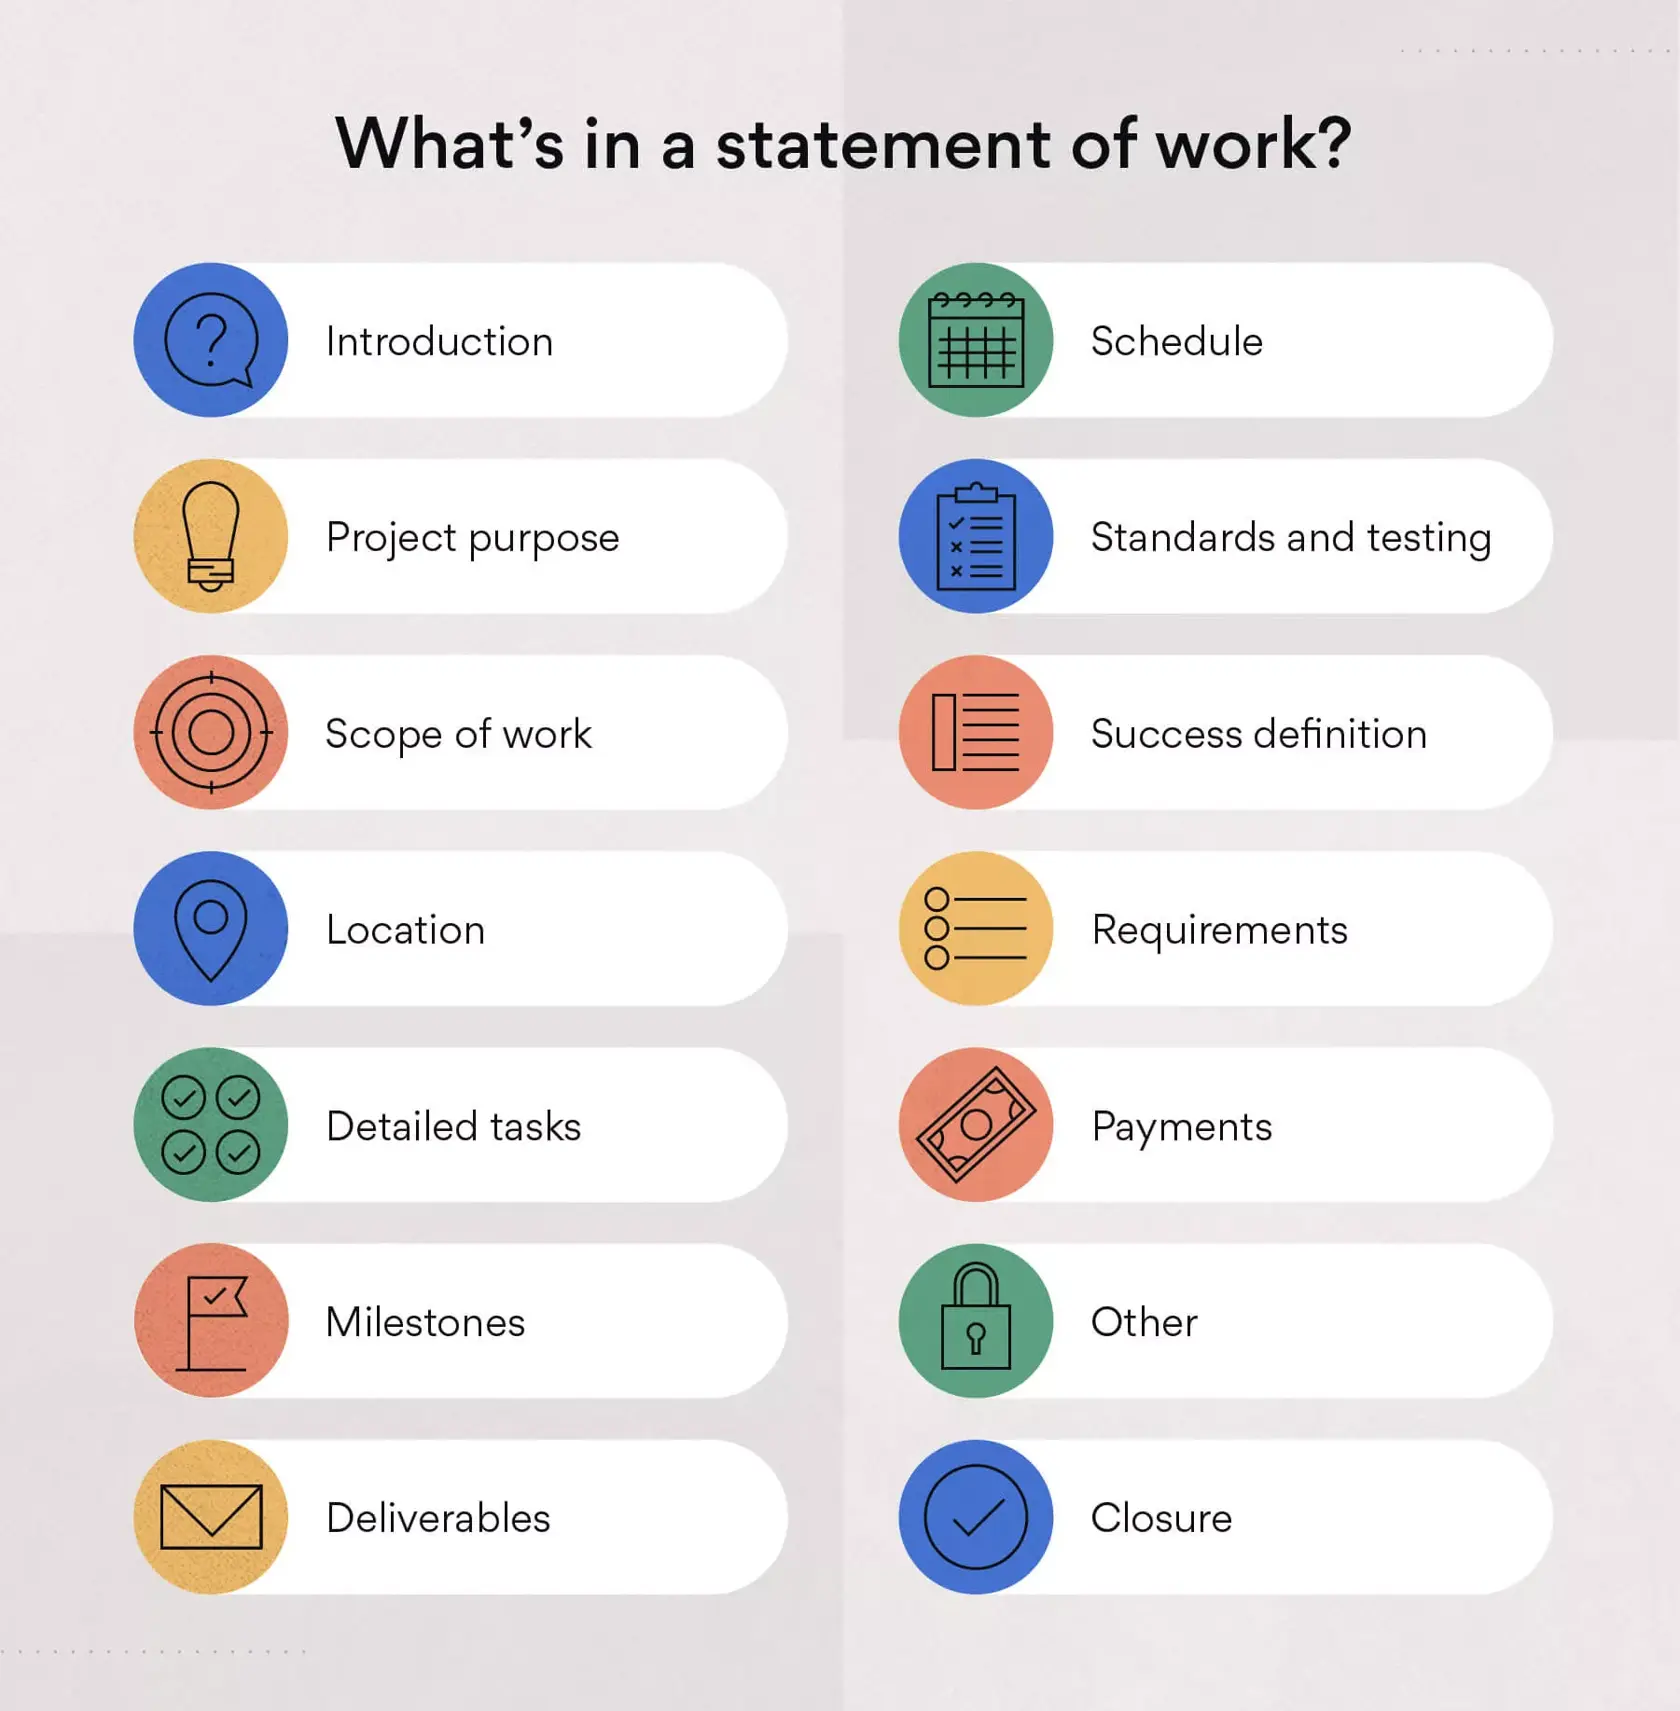 Apa isi statement of work?